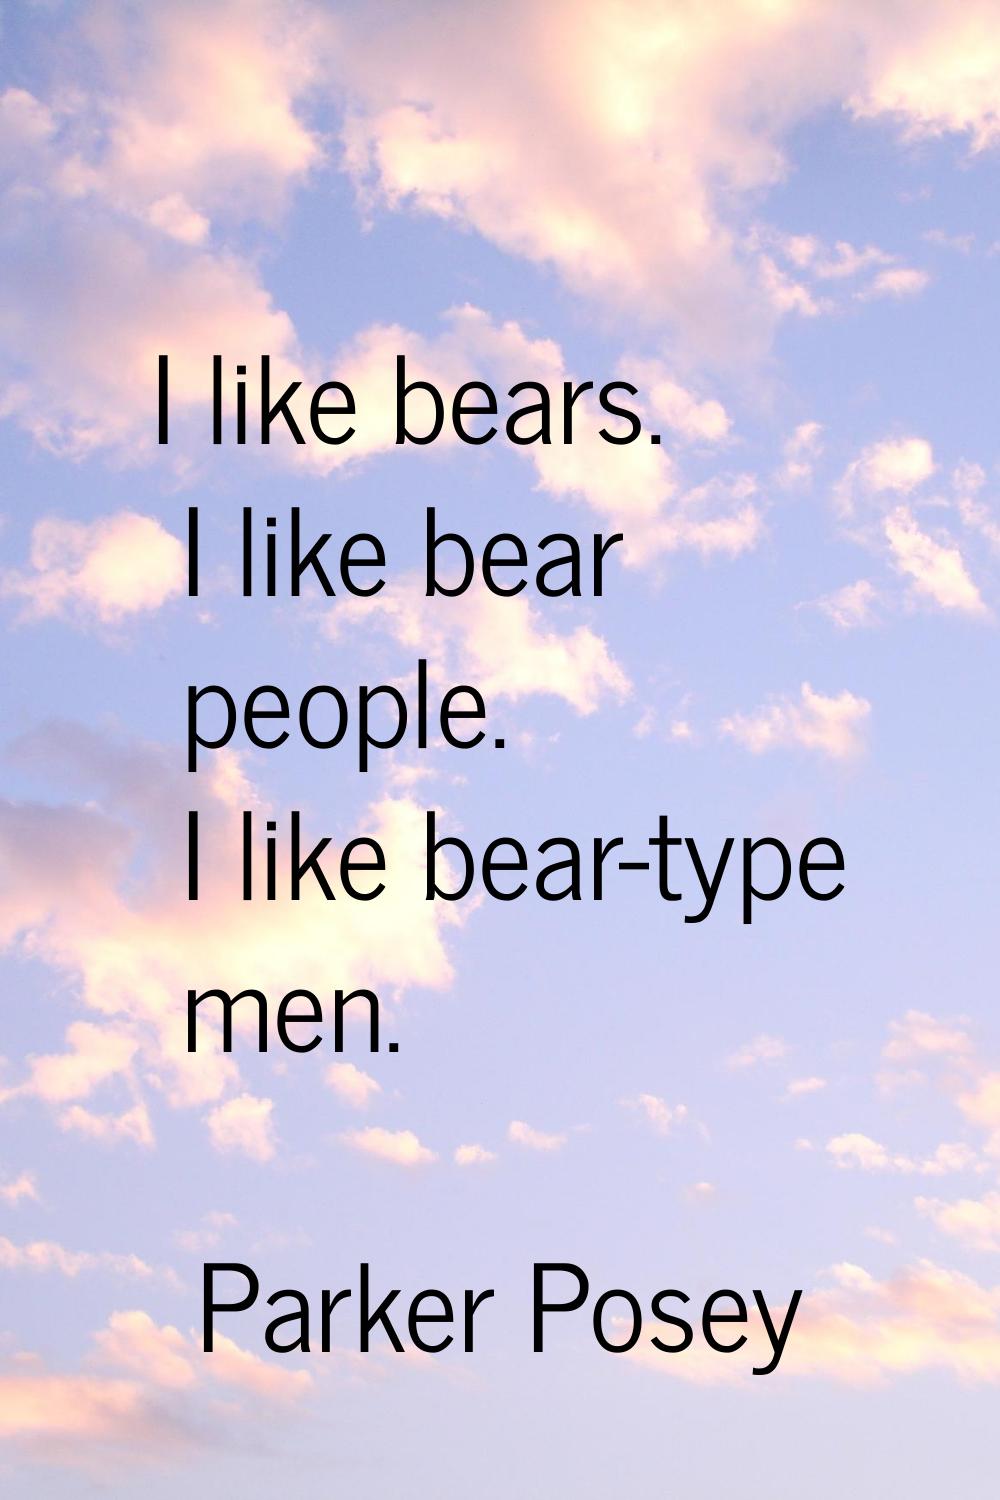 I like bears. I like bear people. I like bear-type men.